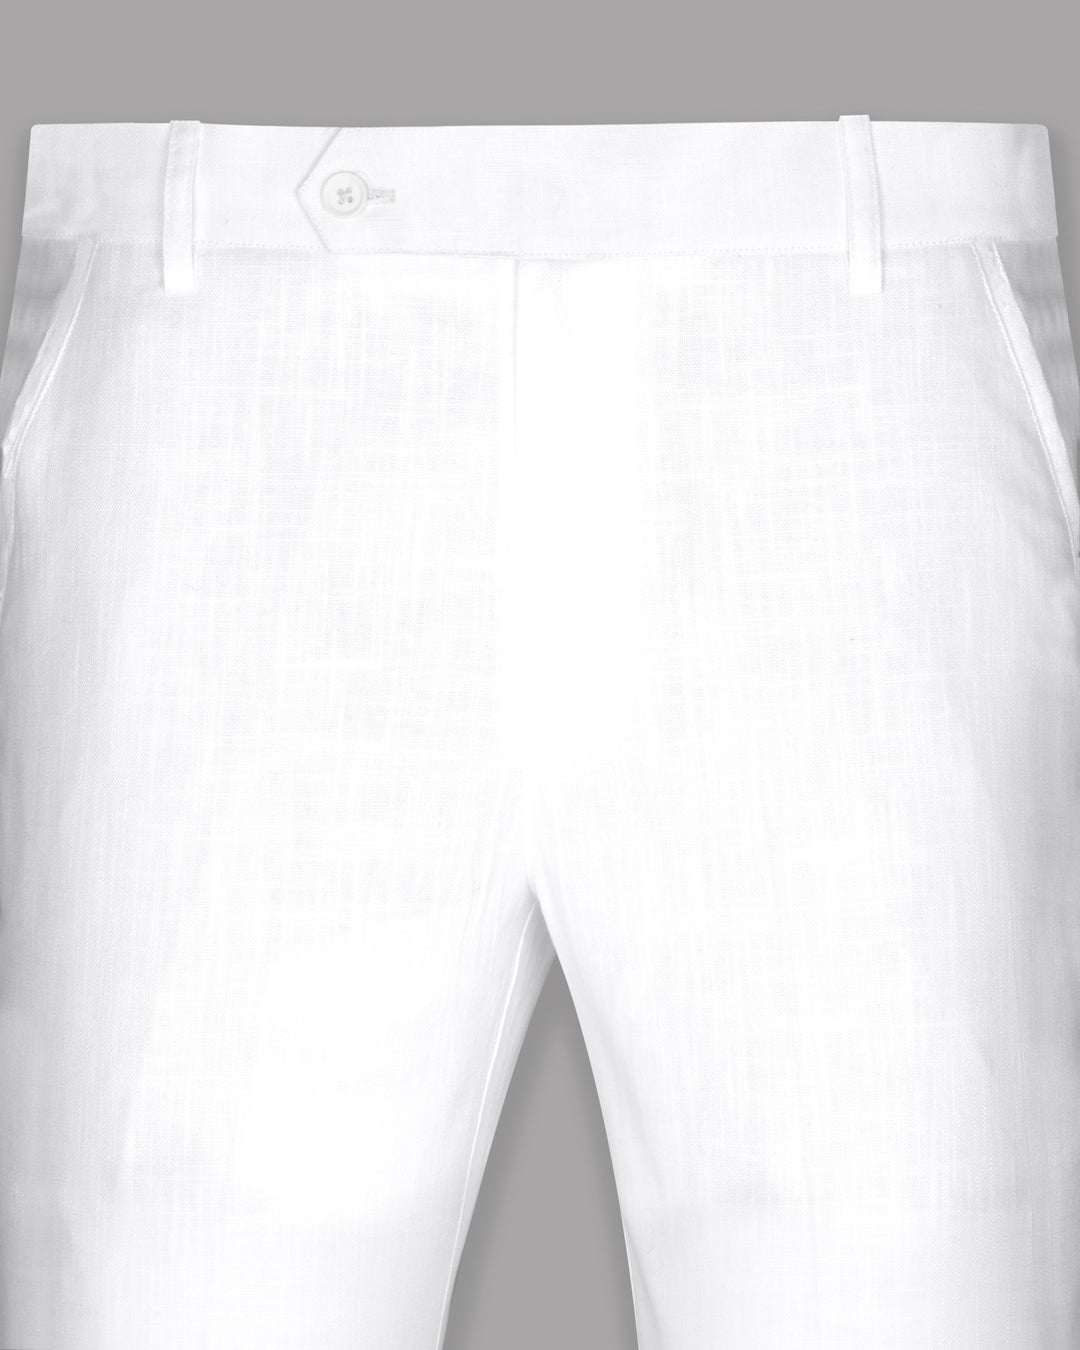 Asian Woman Yellow Shirt White Pants Stock Photo 1142493269 | Shutterstock